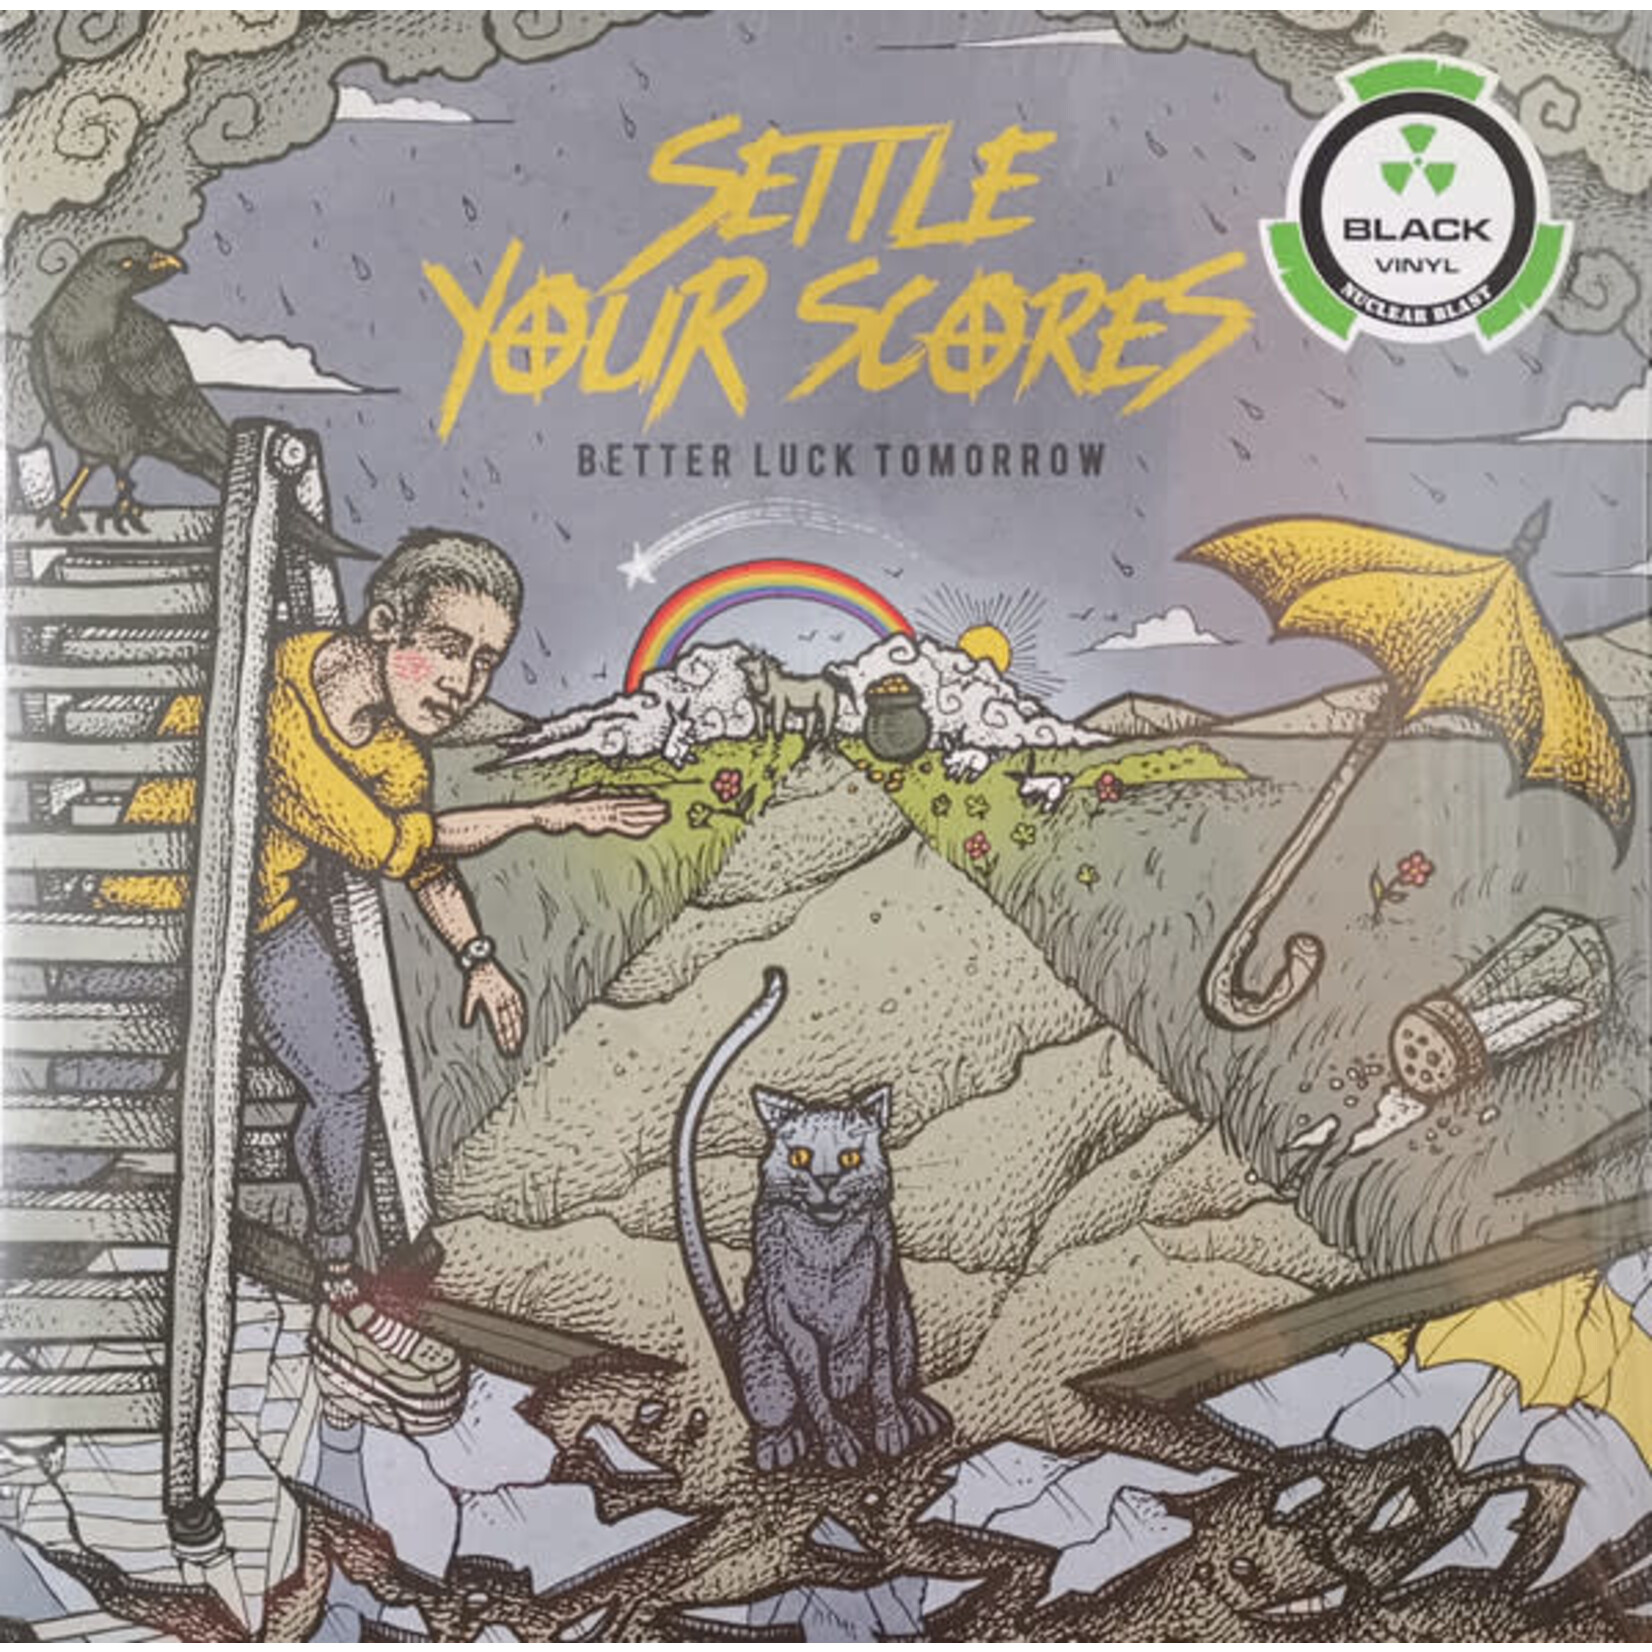 SETTLE YOUR SCORES - BETTER LUCK TOMORROW - LP